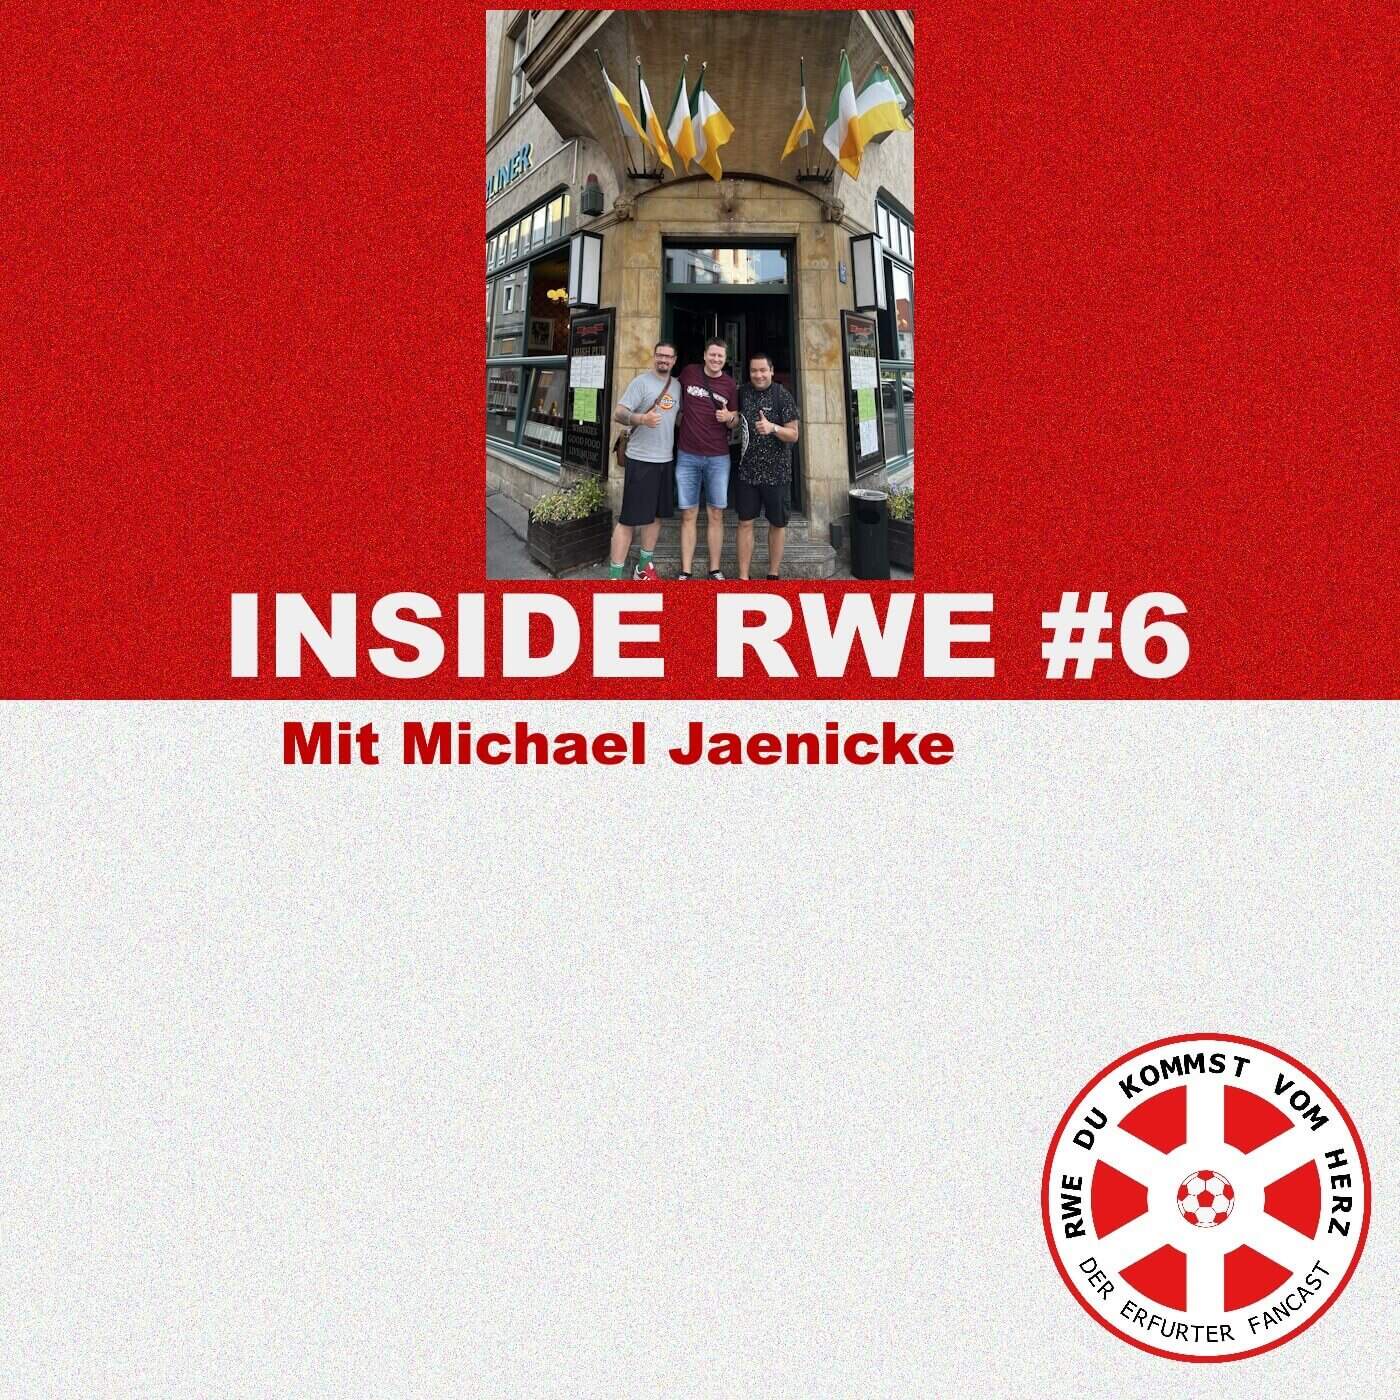 #59 INSIDE RWE #6 Mit Michael Jaenicke